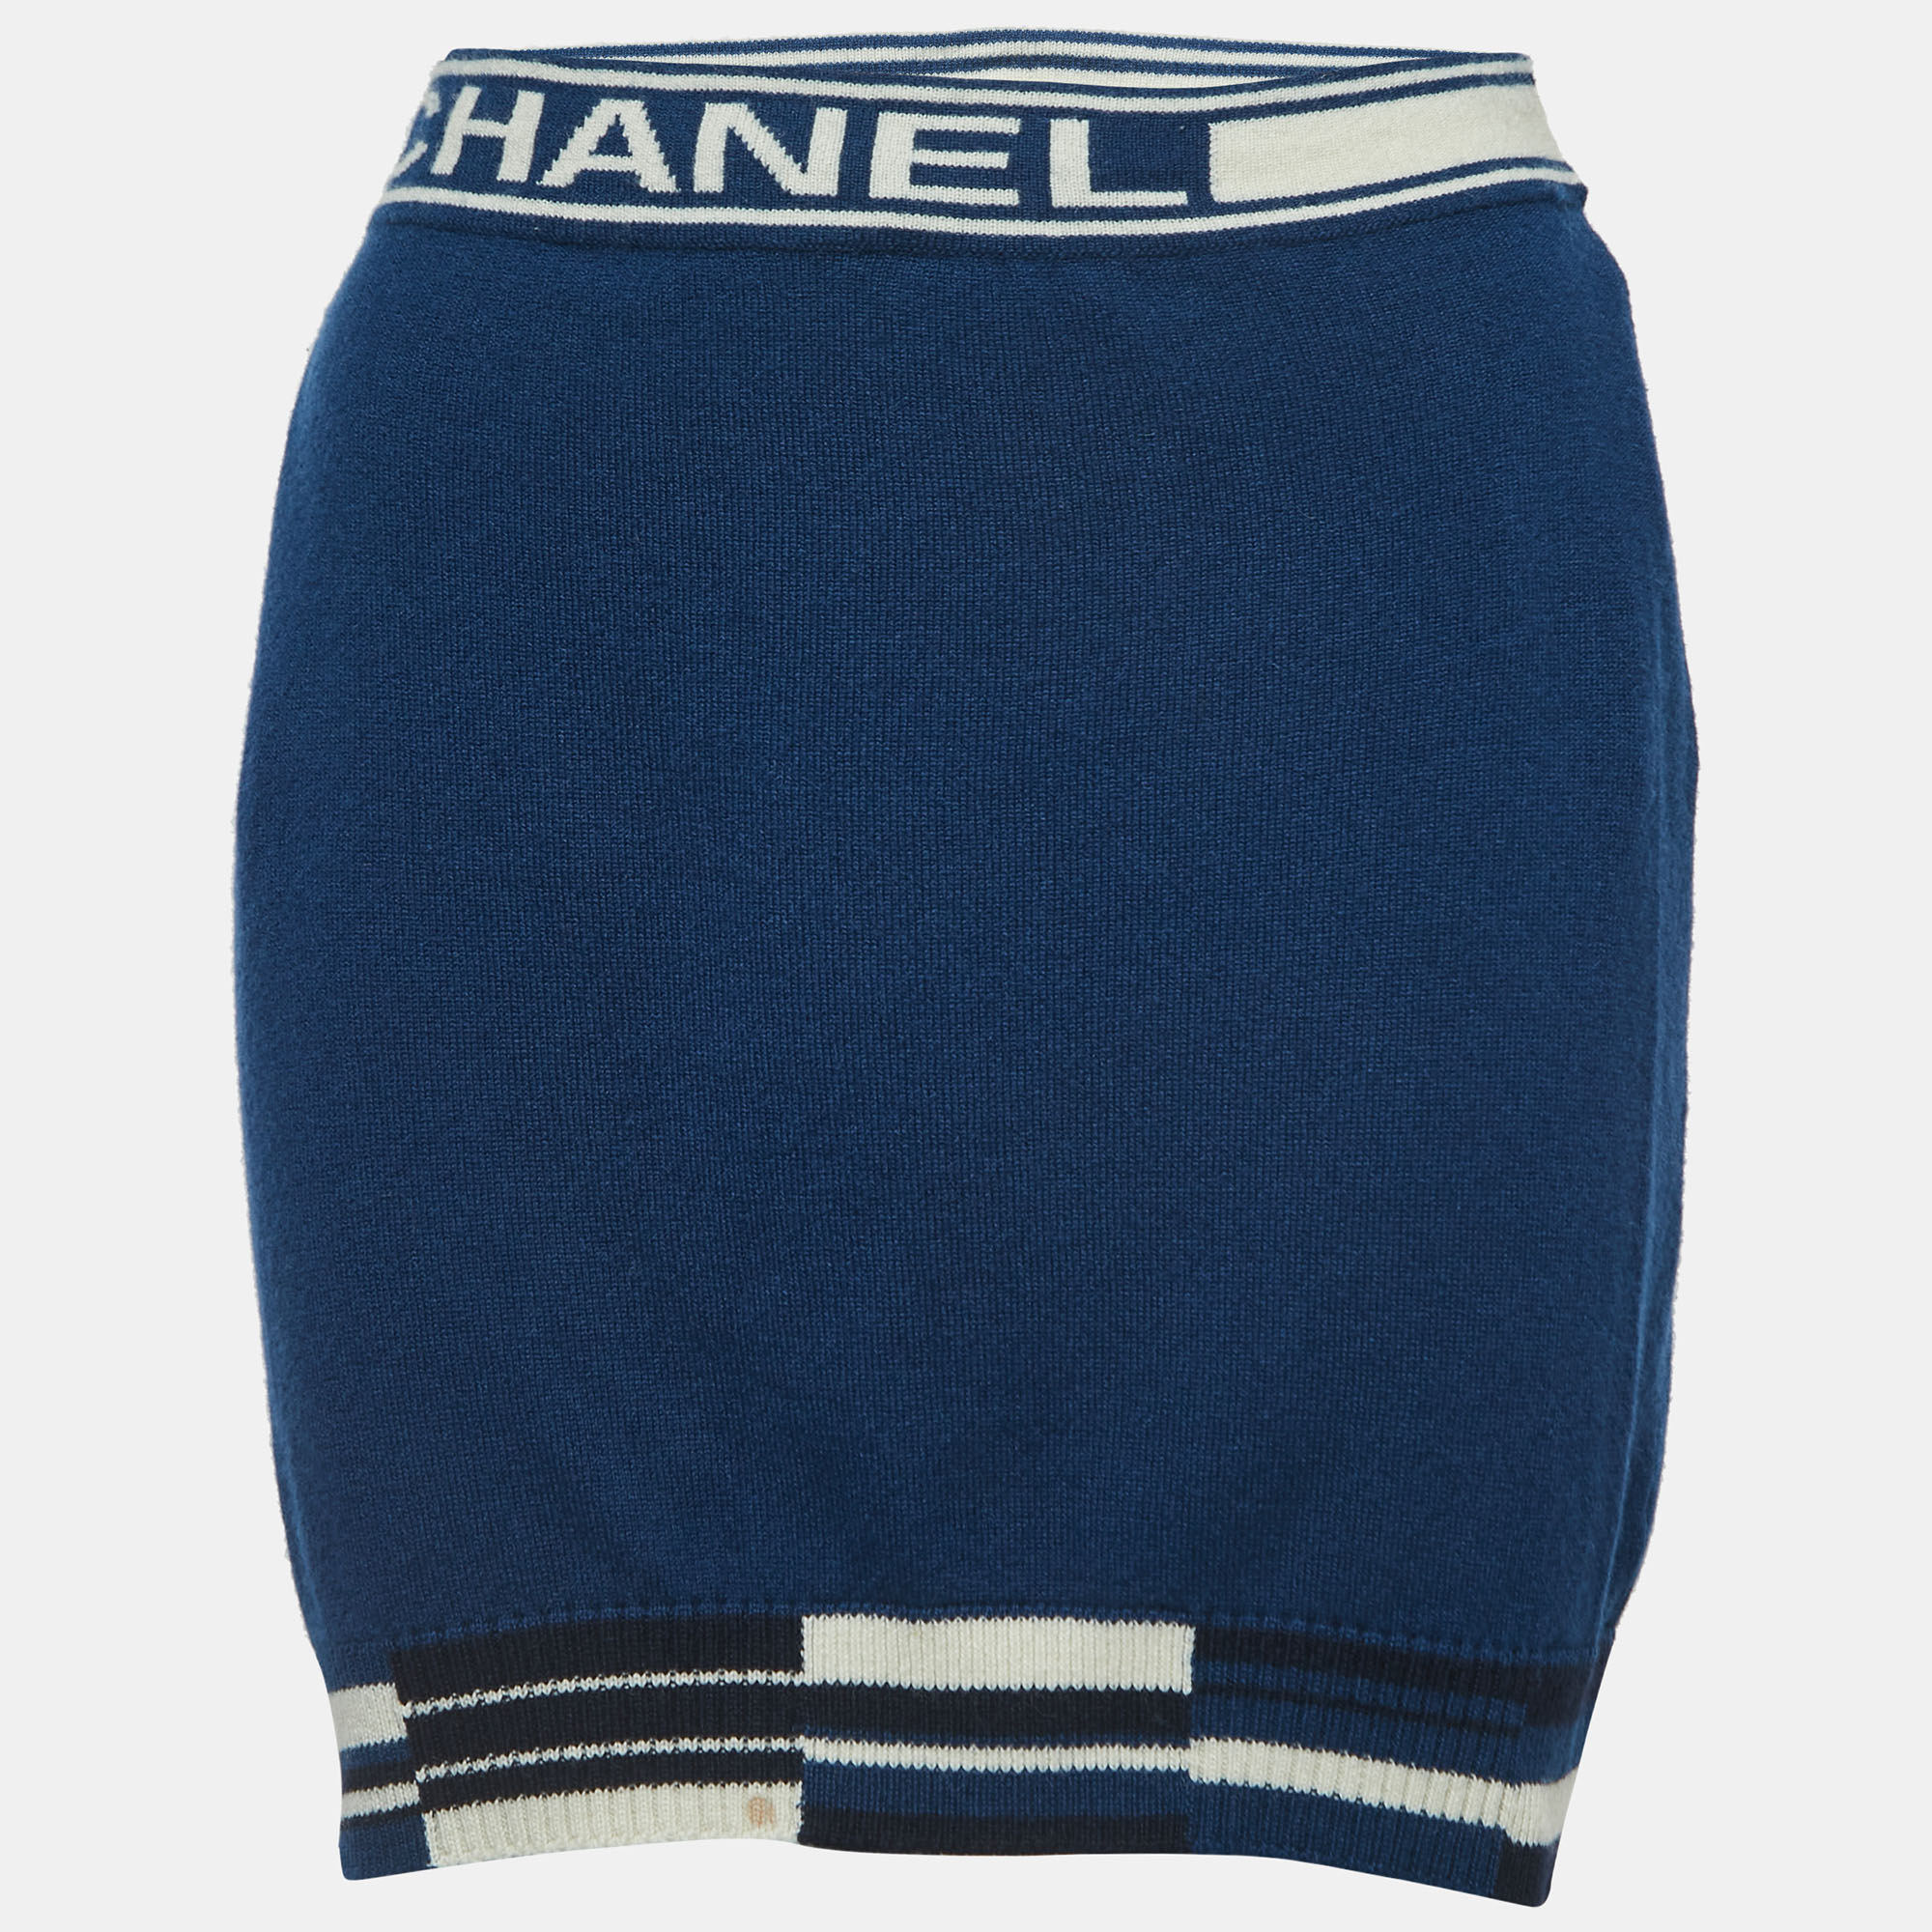 Chanel Navy Blue Logo Patterned Cashmere Mini Skirt S